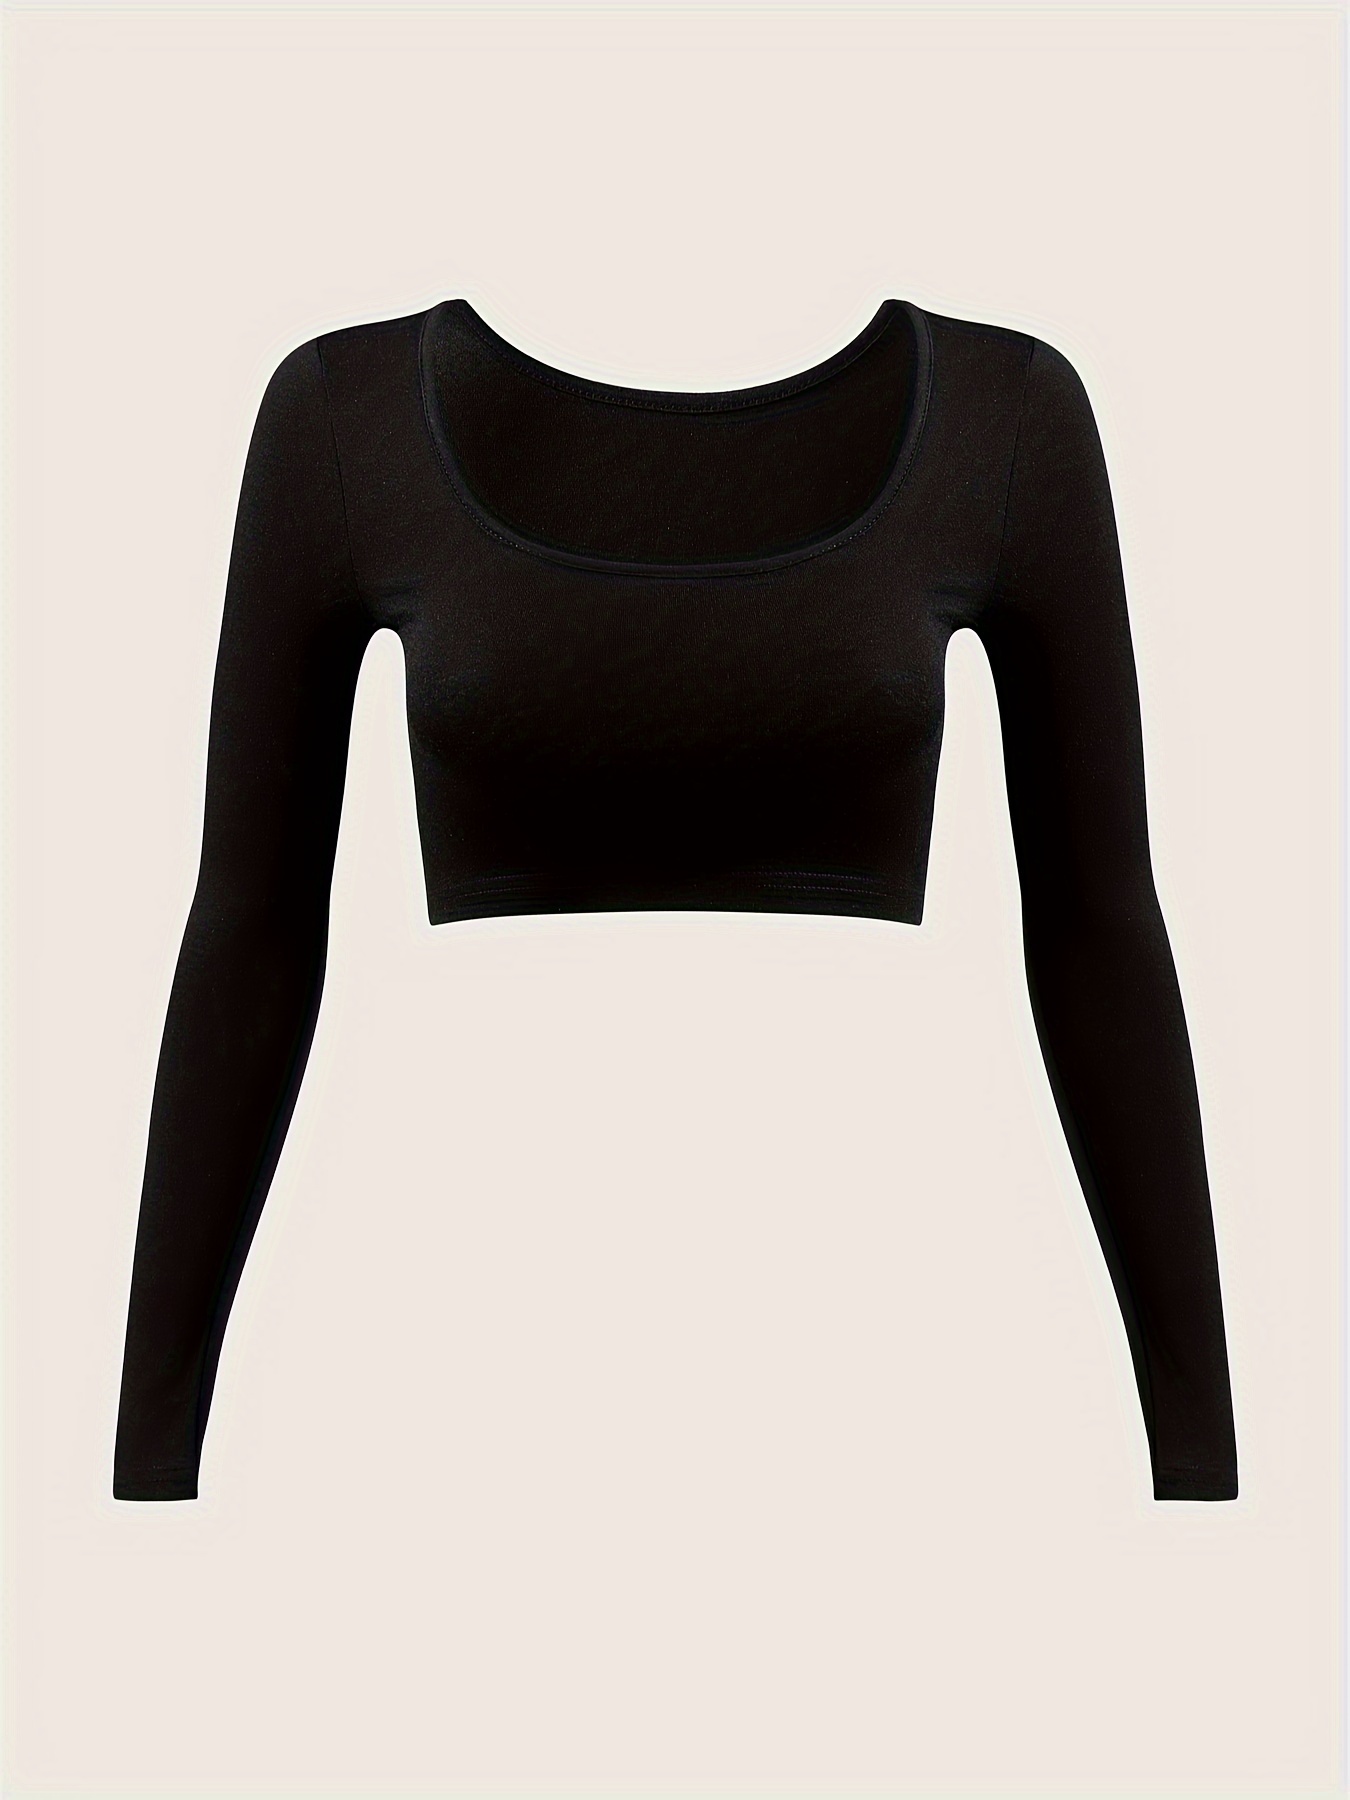 Women's Black Long sleeve Crop Tops